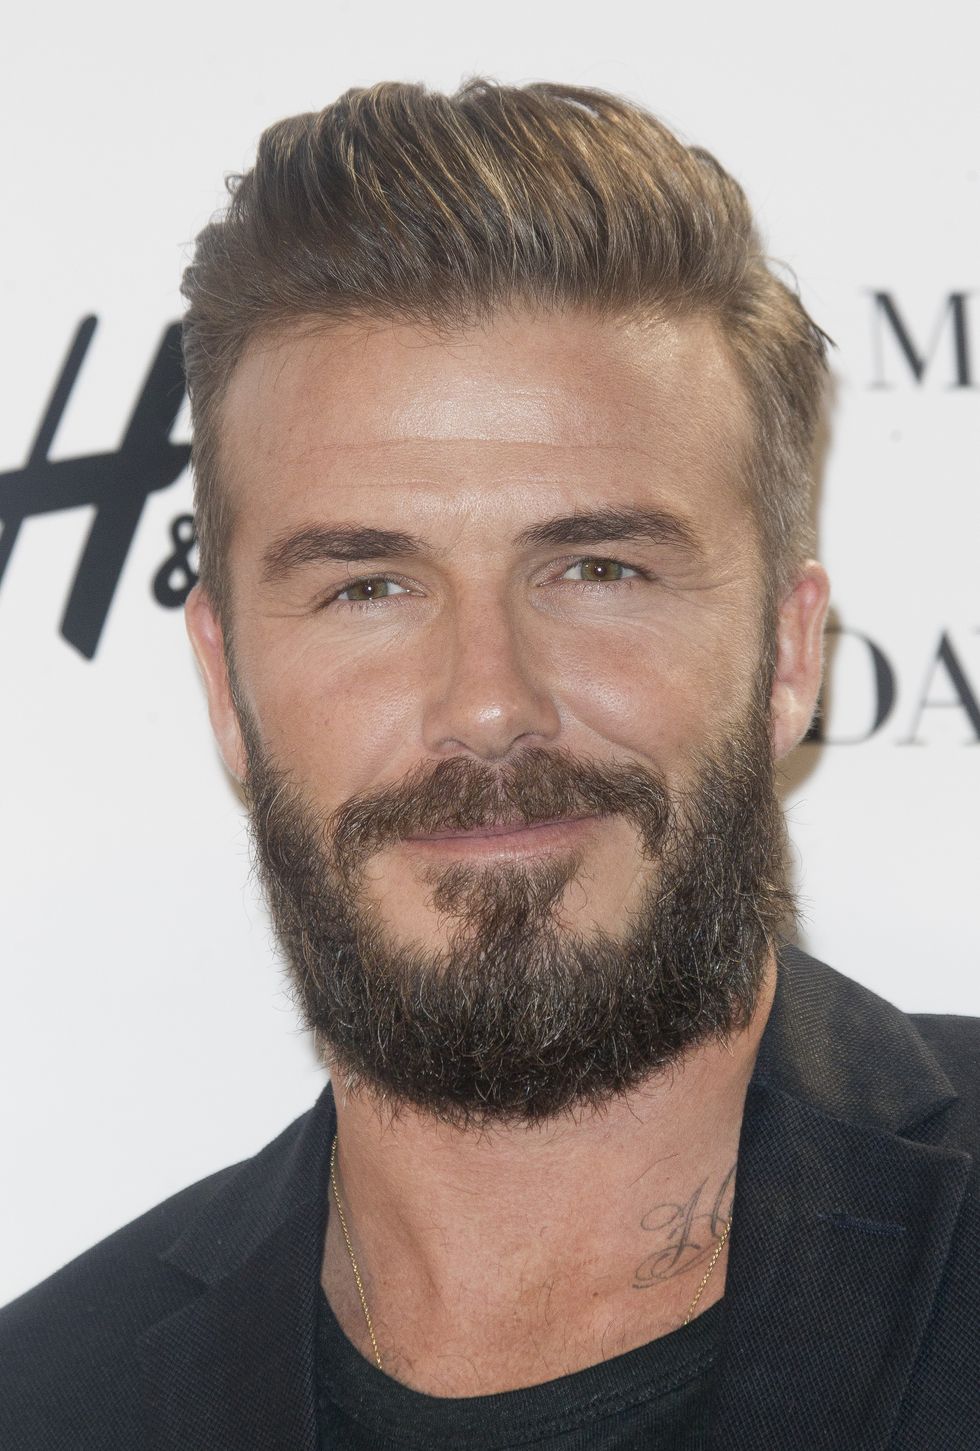 David Beckham con barba muy poblada